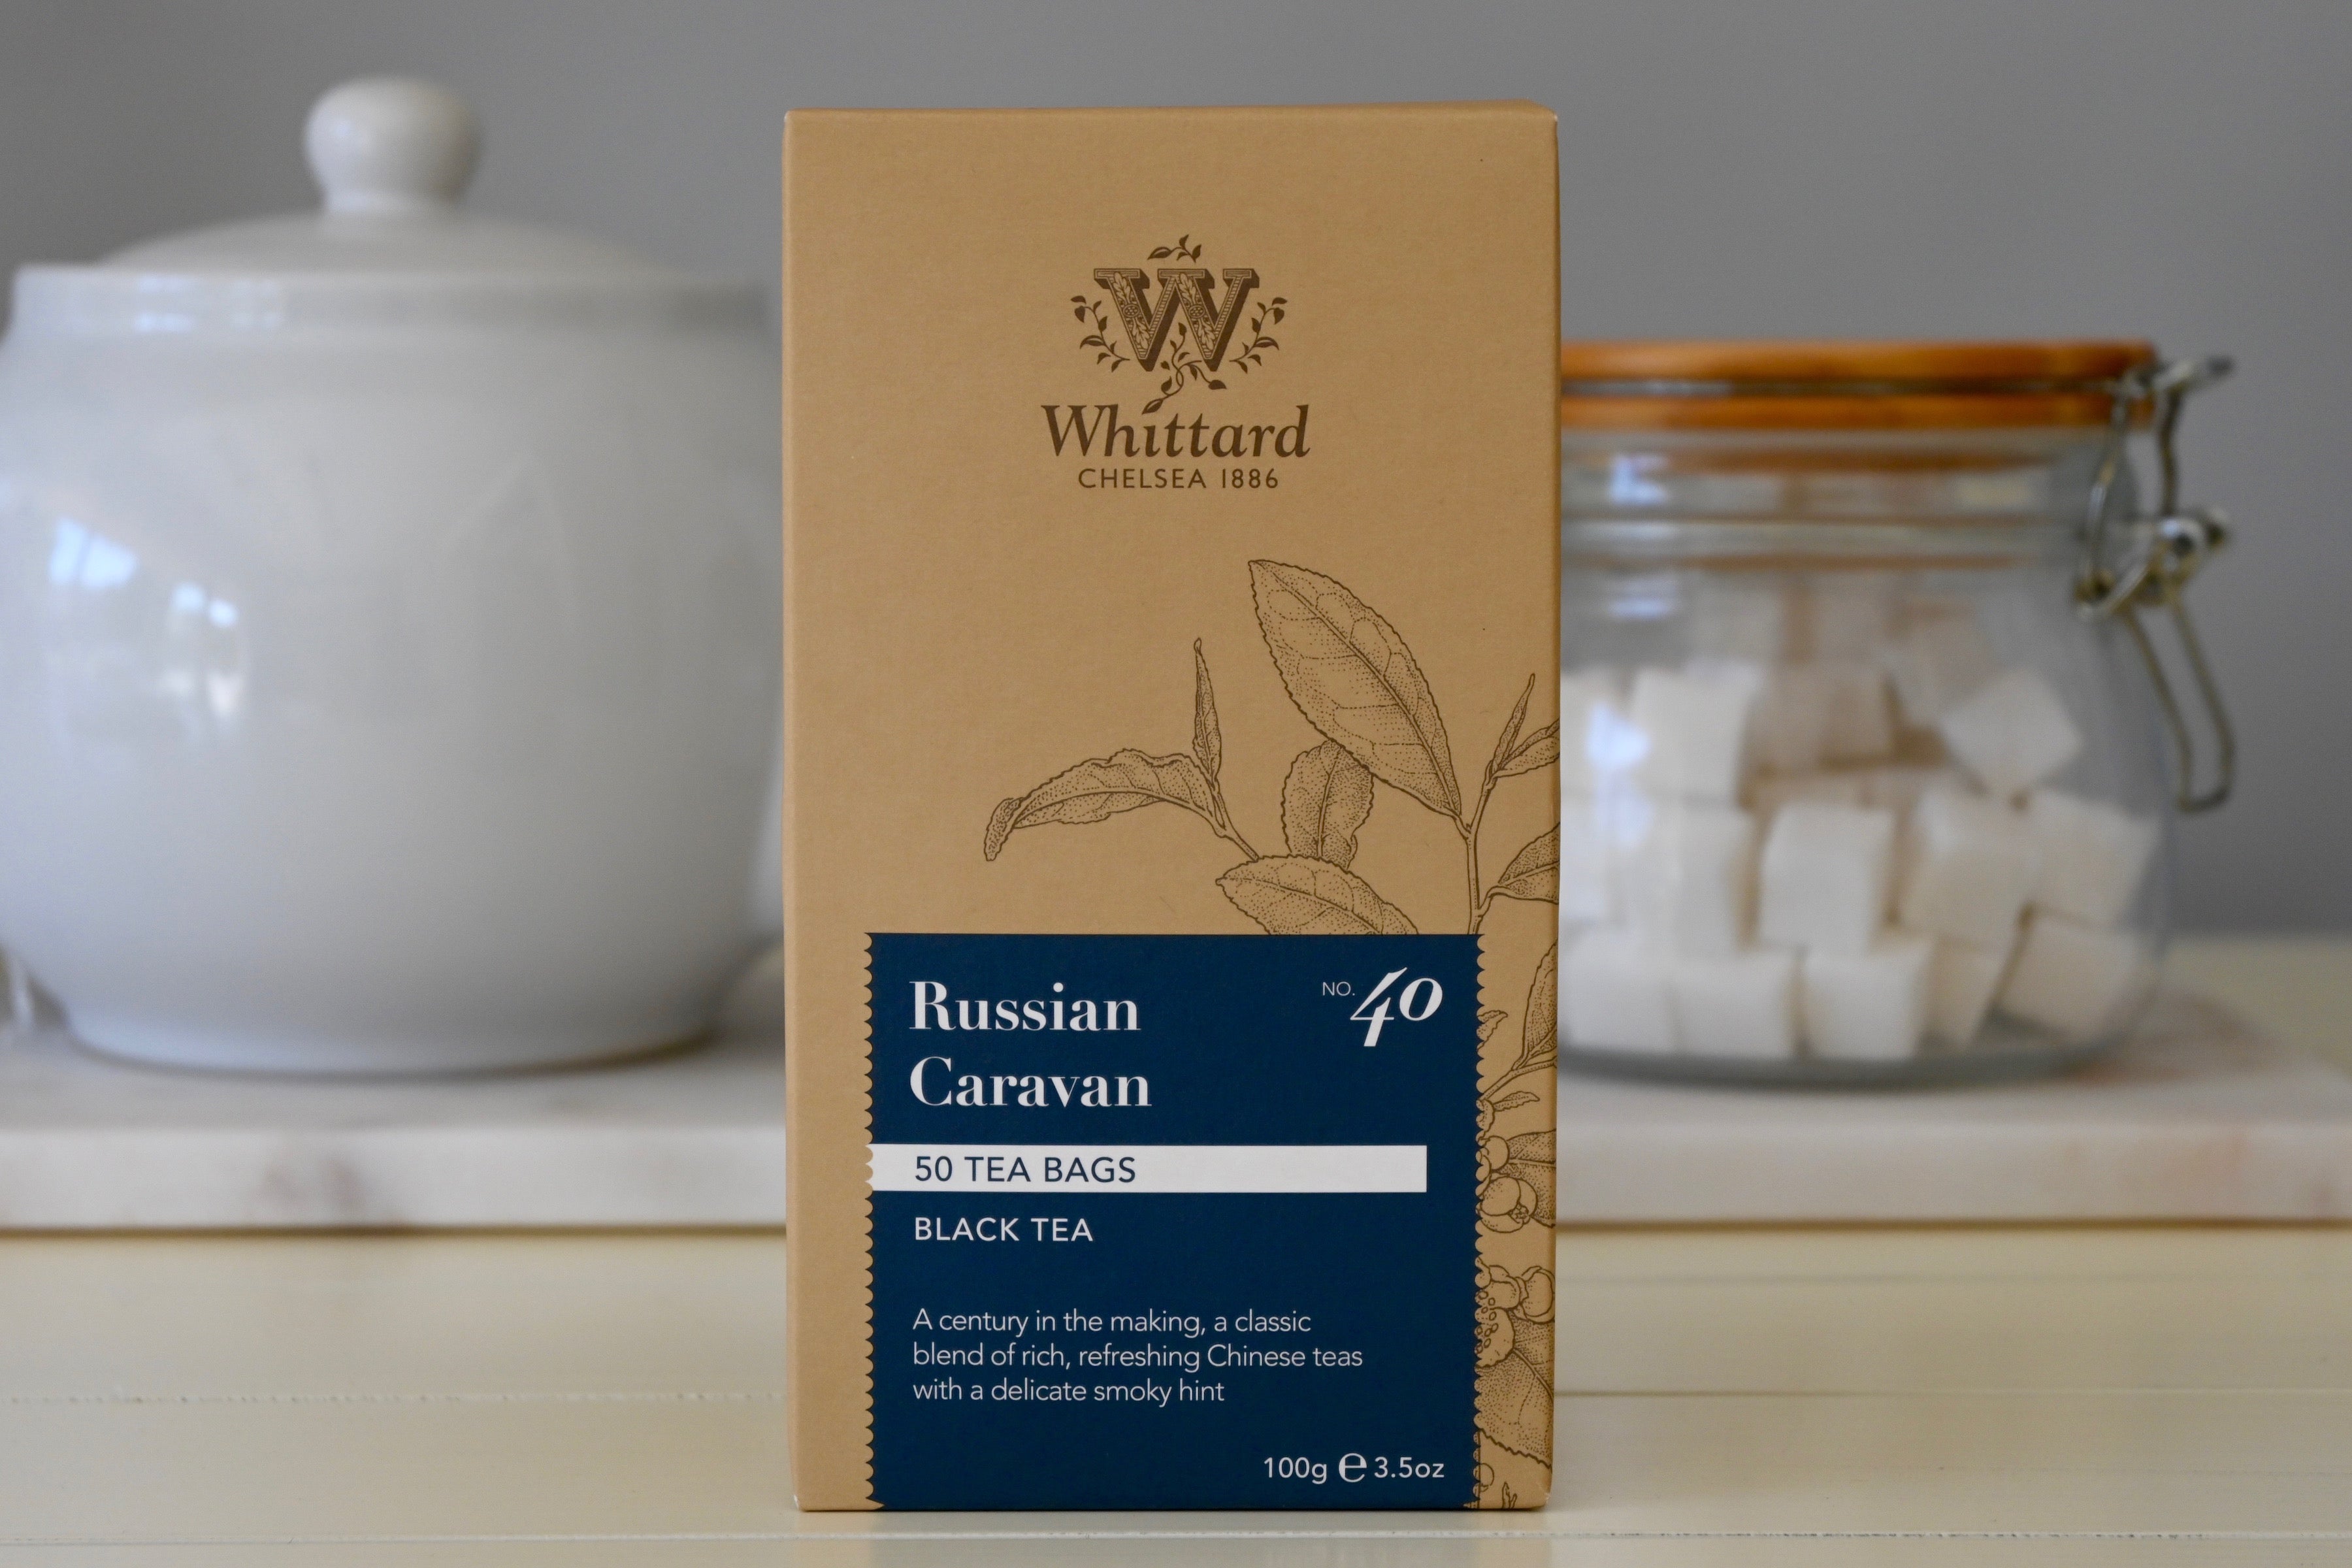 Russian Caravan Black Tea 50 Round Teabags Whittard - NEW blend - Best